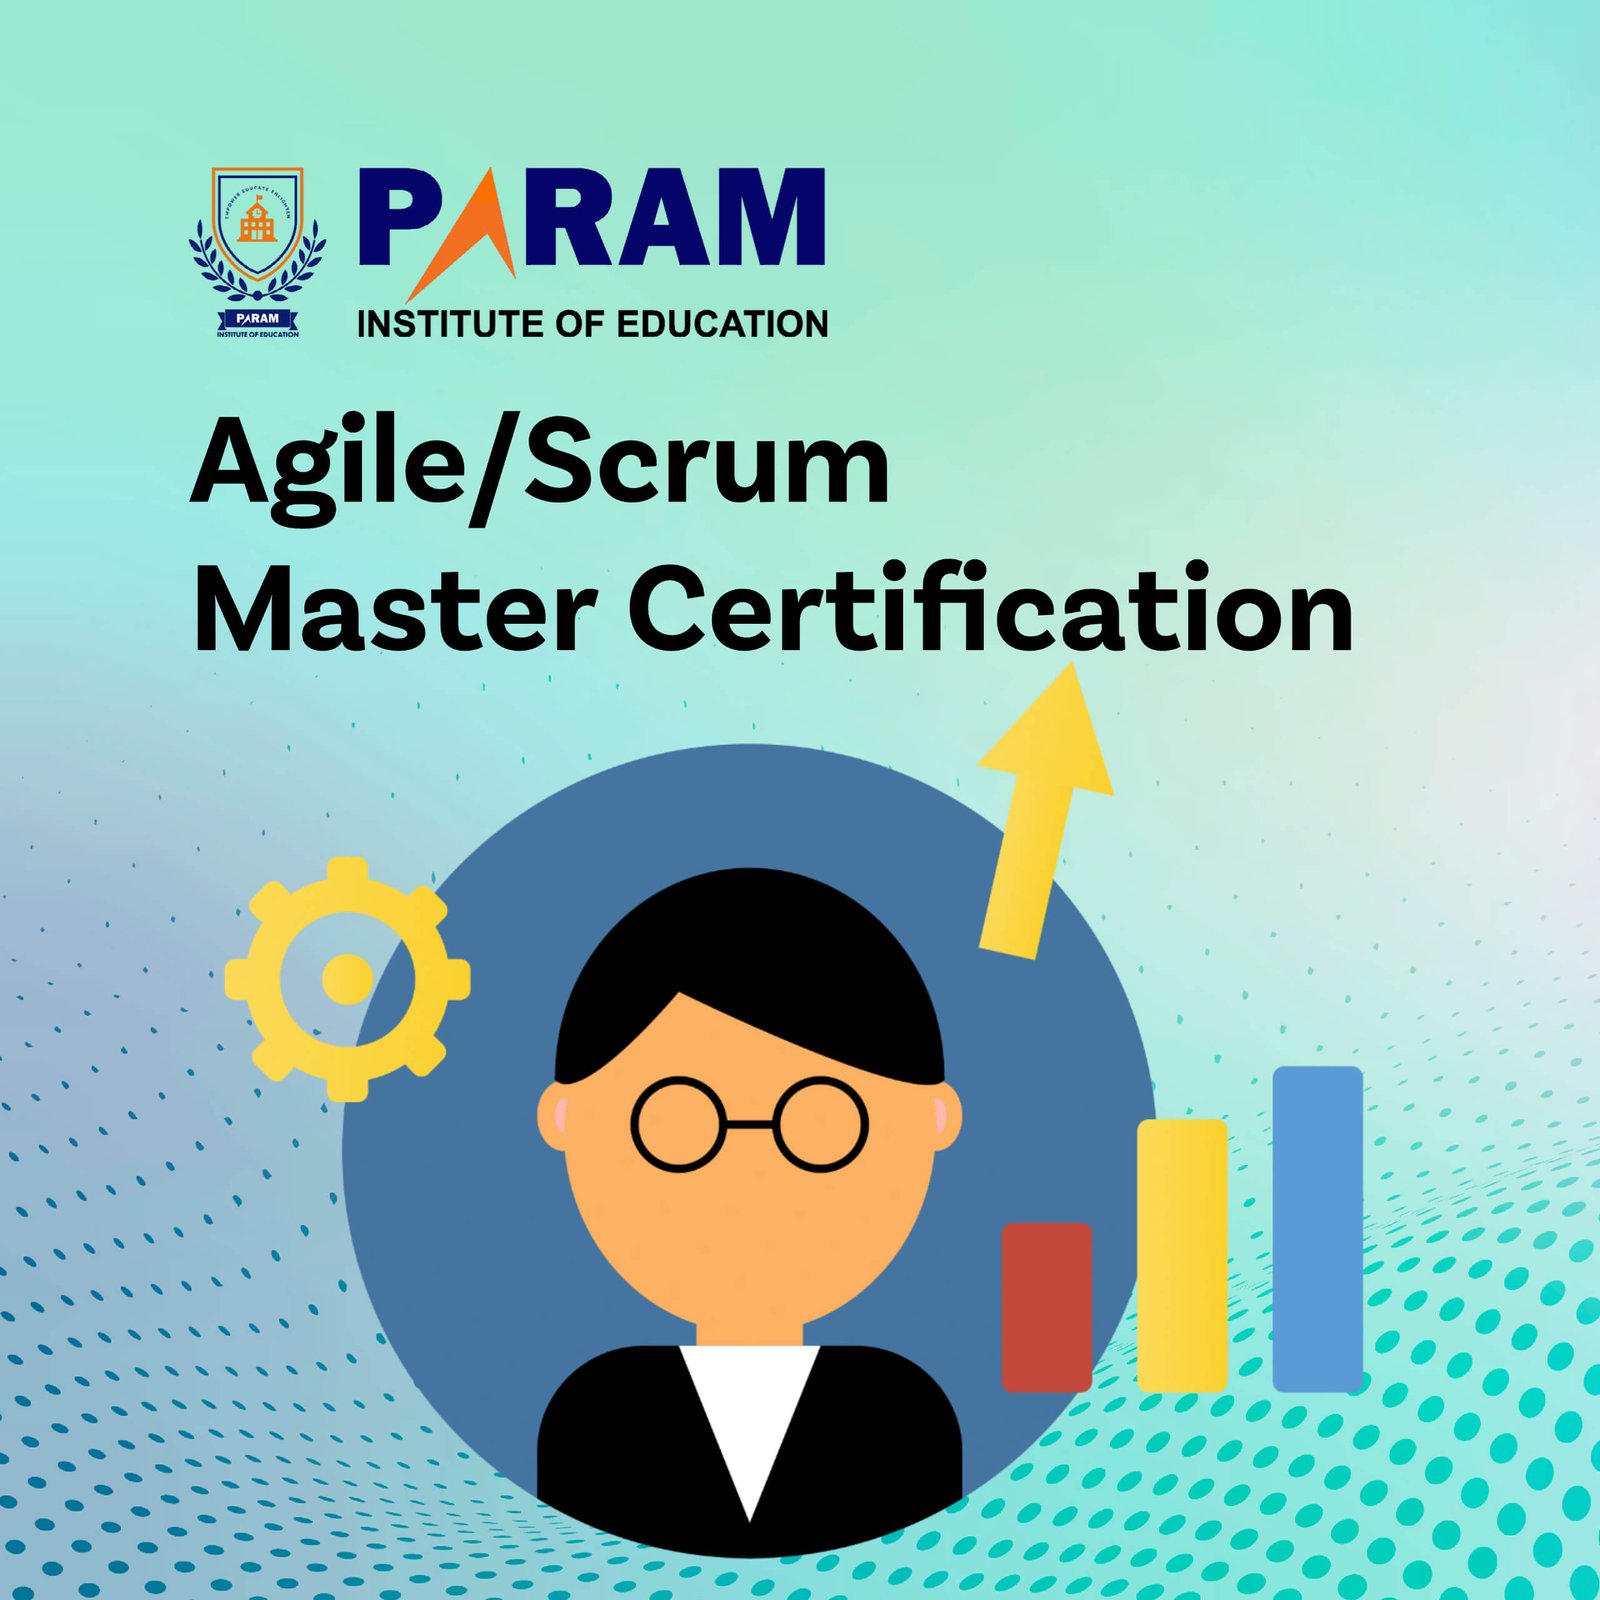 Agile/Scrum Master Certification Program